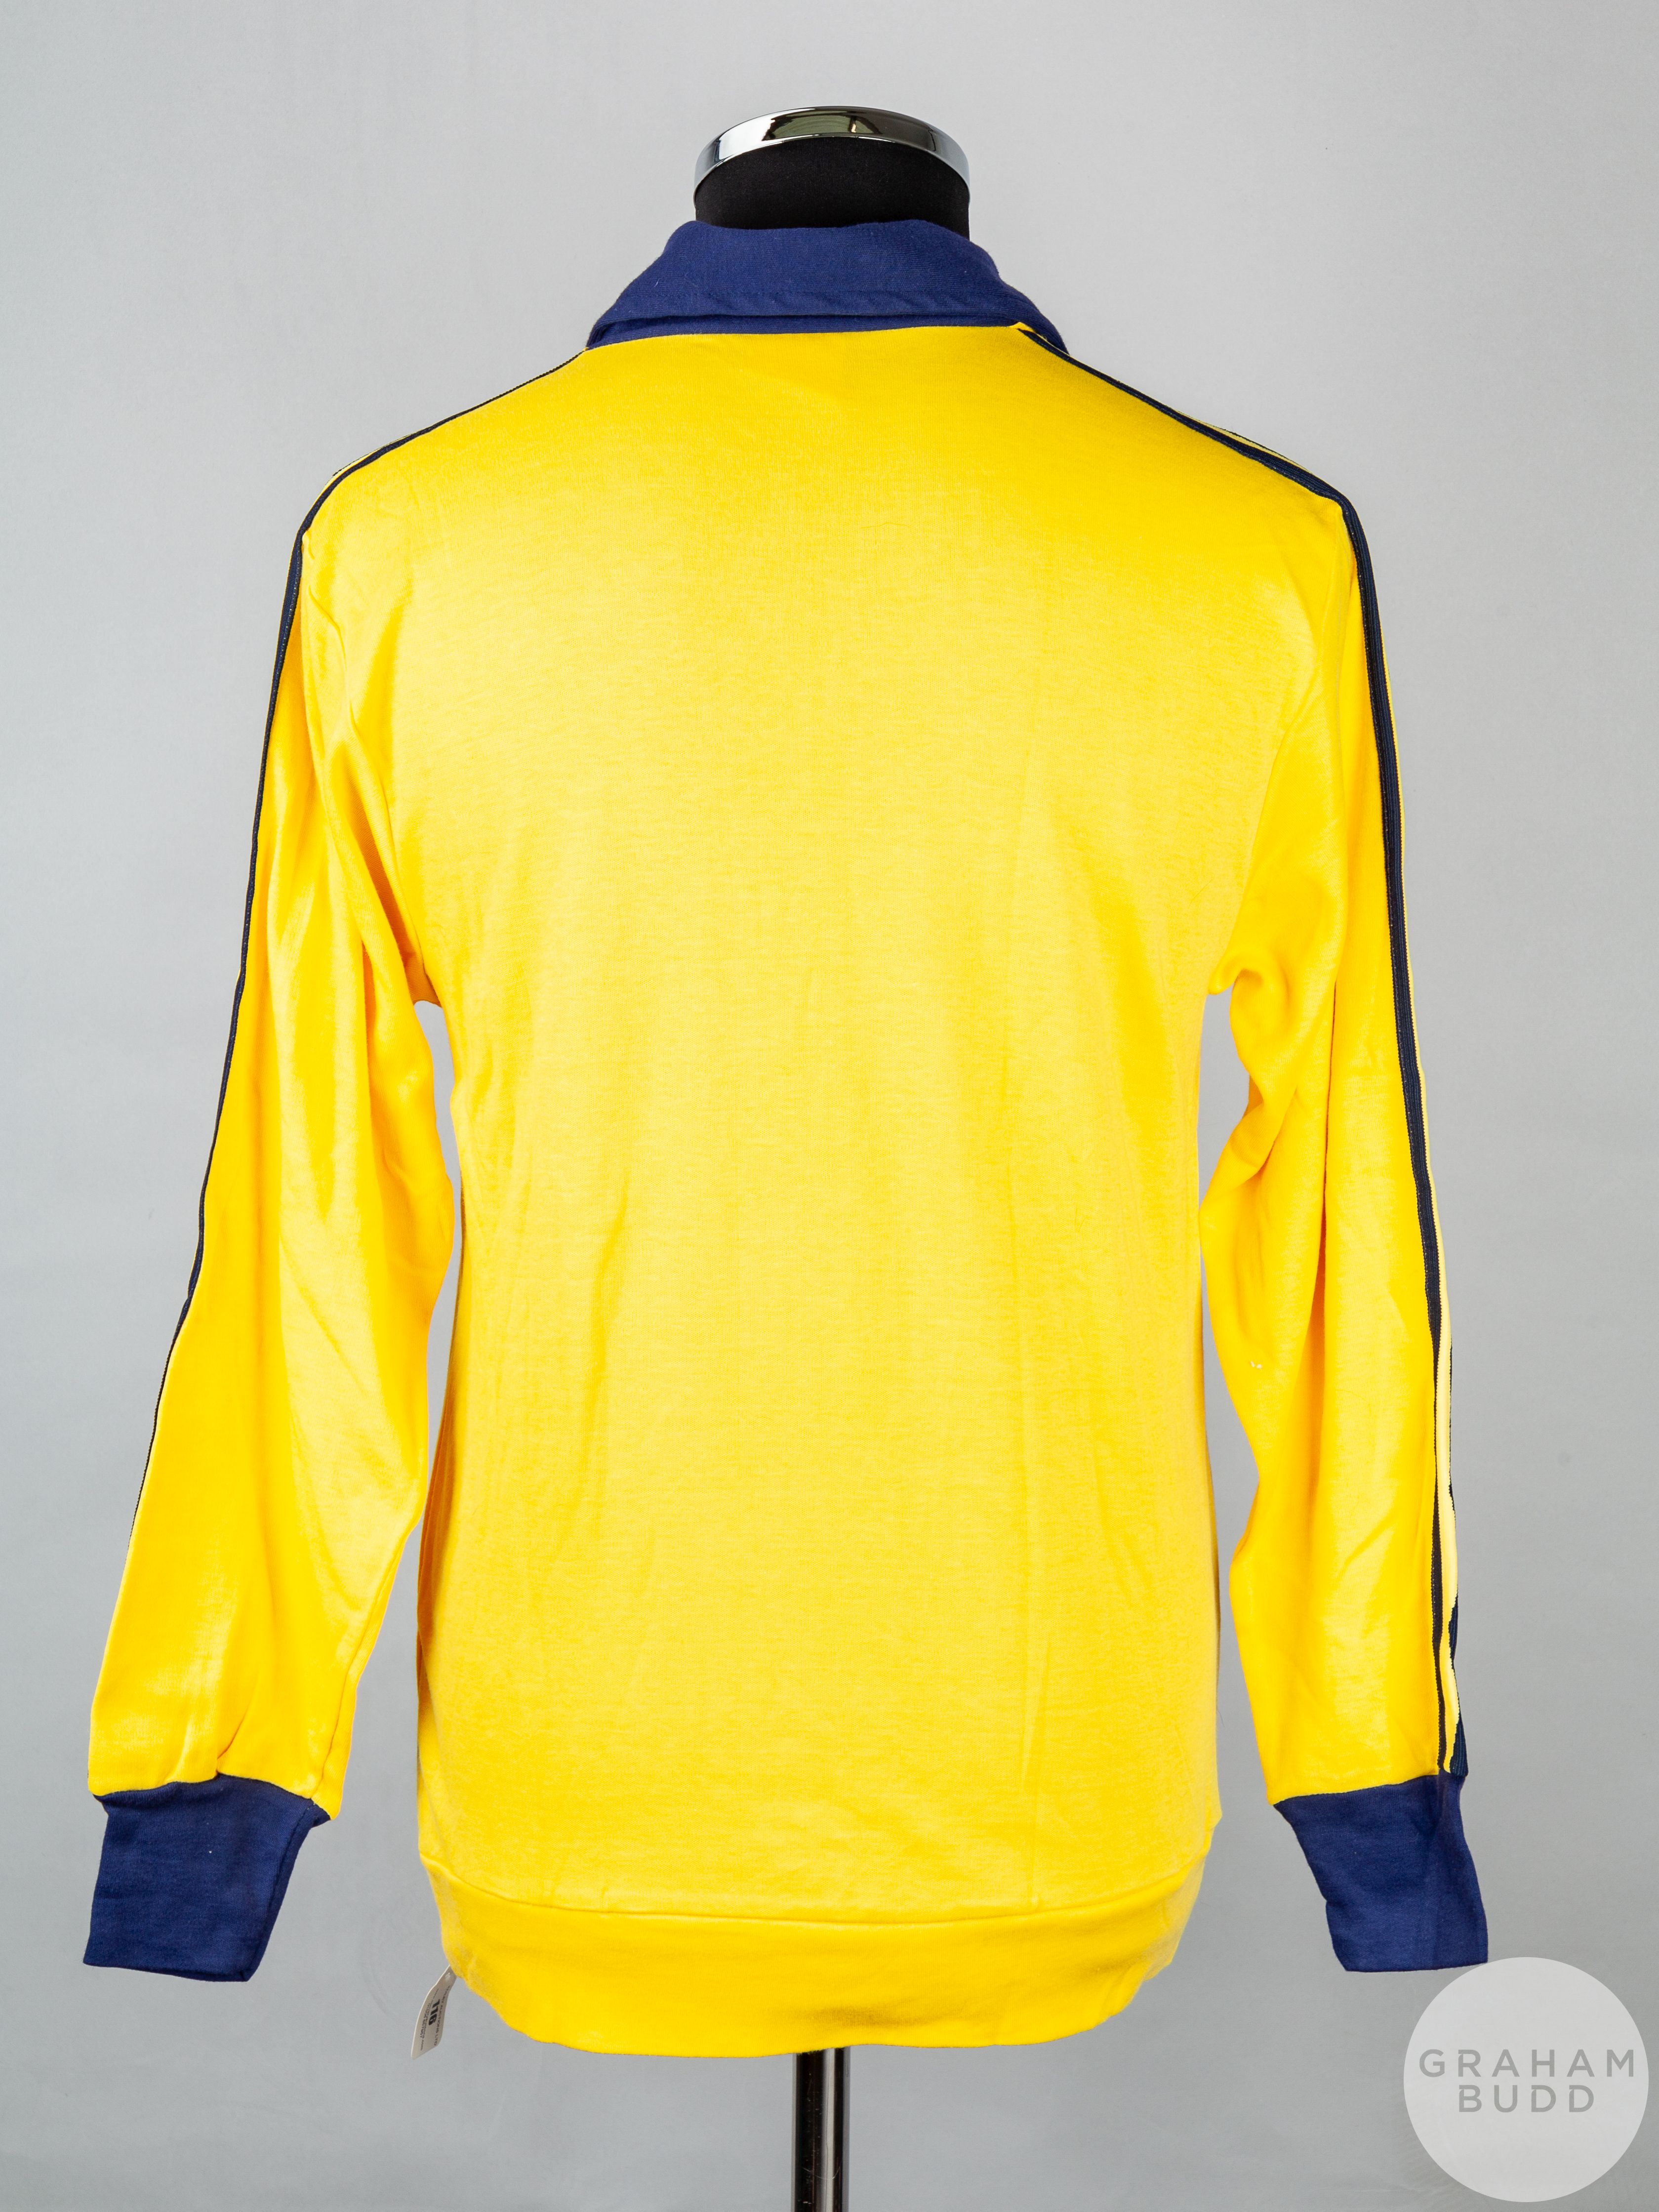 Rare yellow and blue Scotland International goalkeepers shirt - Image 2 of 4